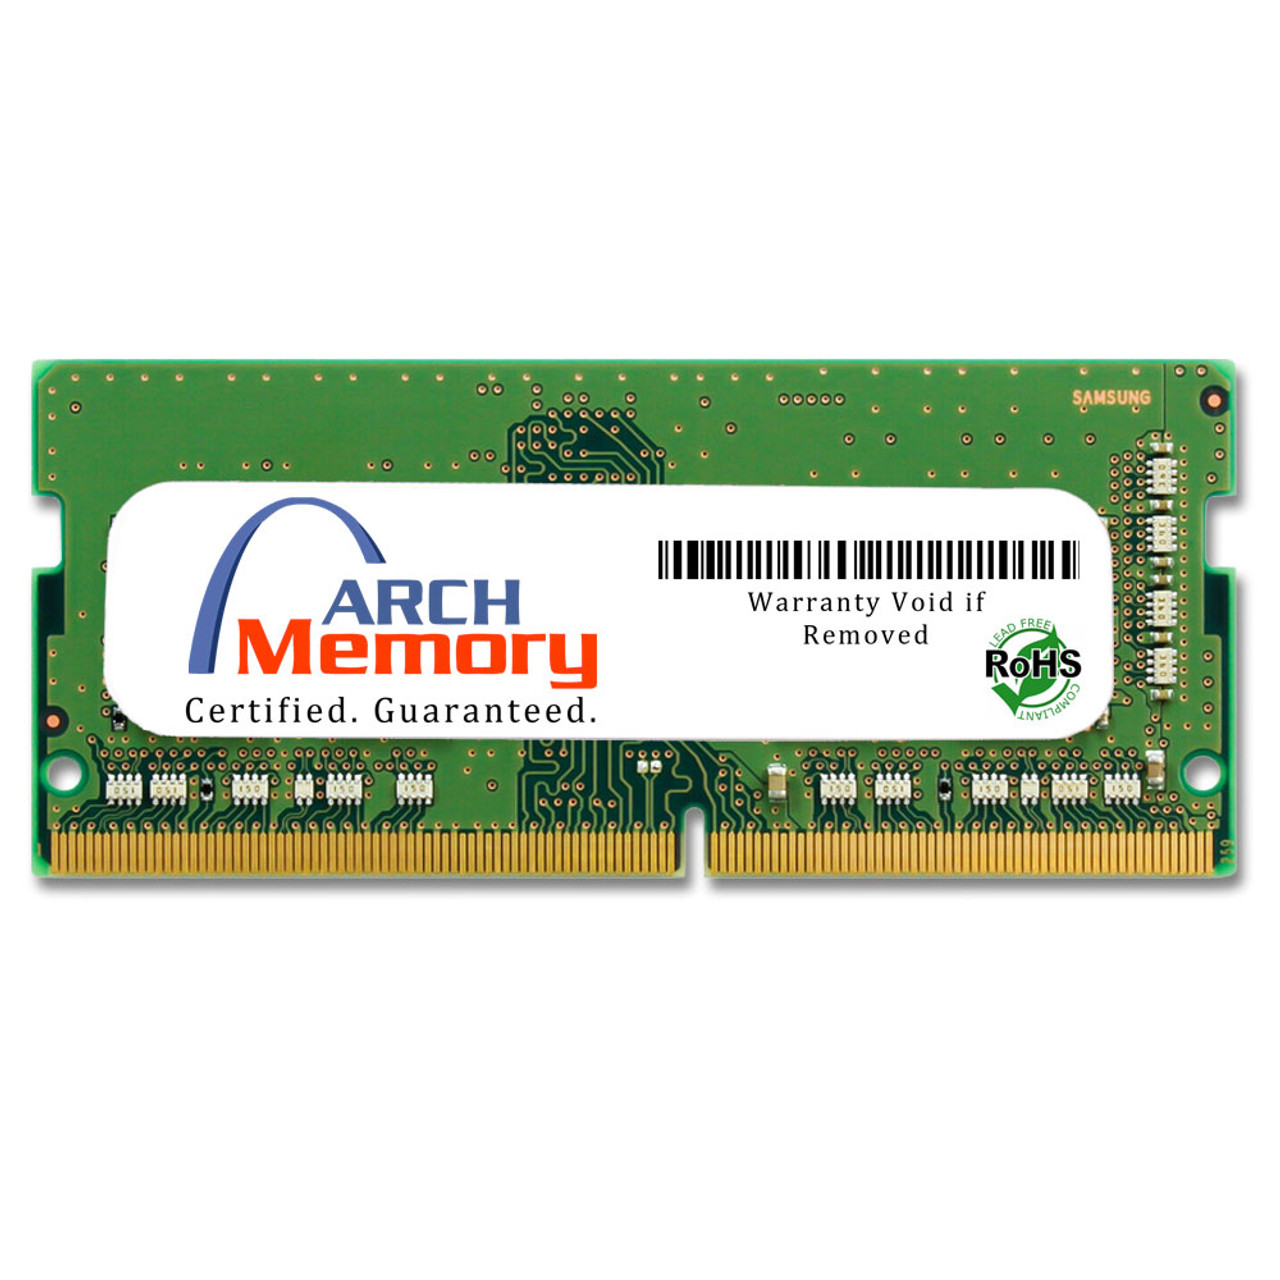 4GB 260-Pin DDR4-2400 PC4-12900 Sodimm (1Rx8) RAM | Arch Memory